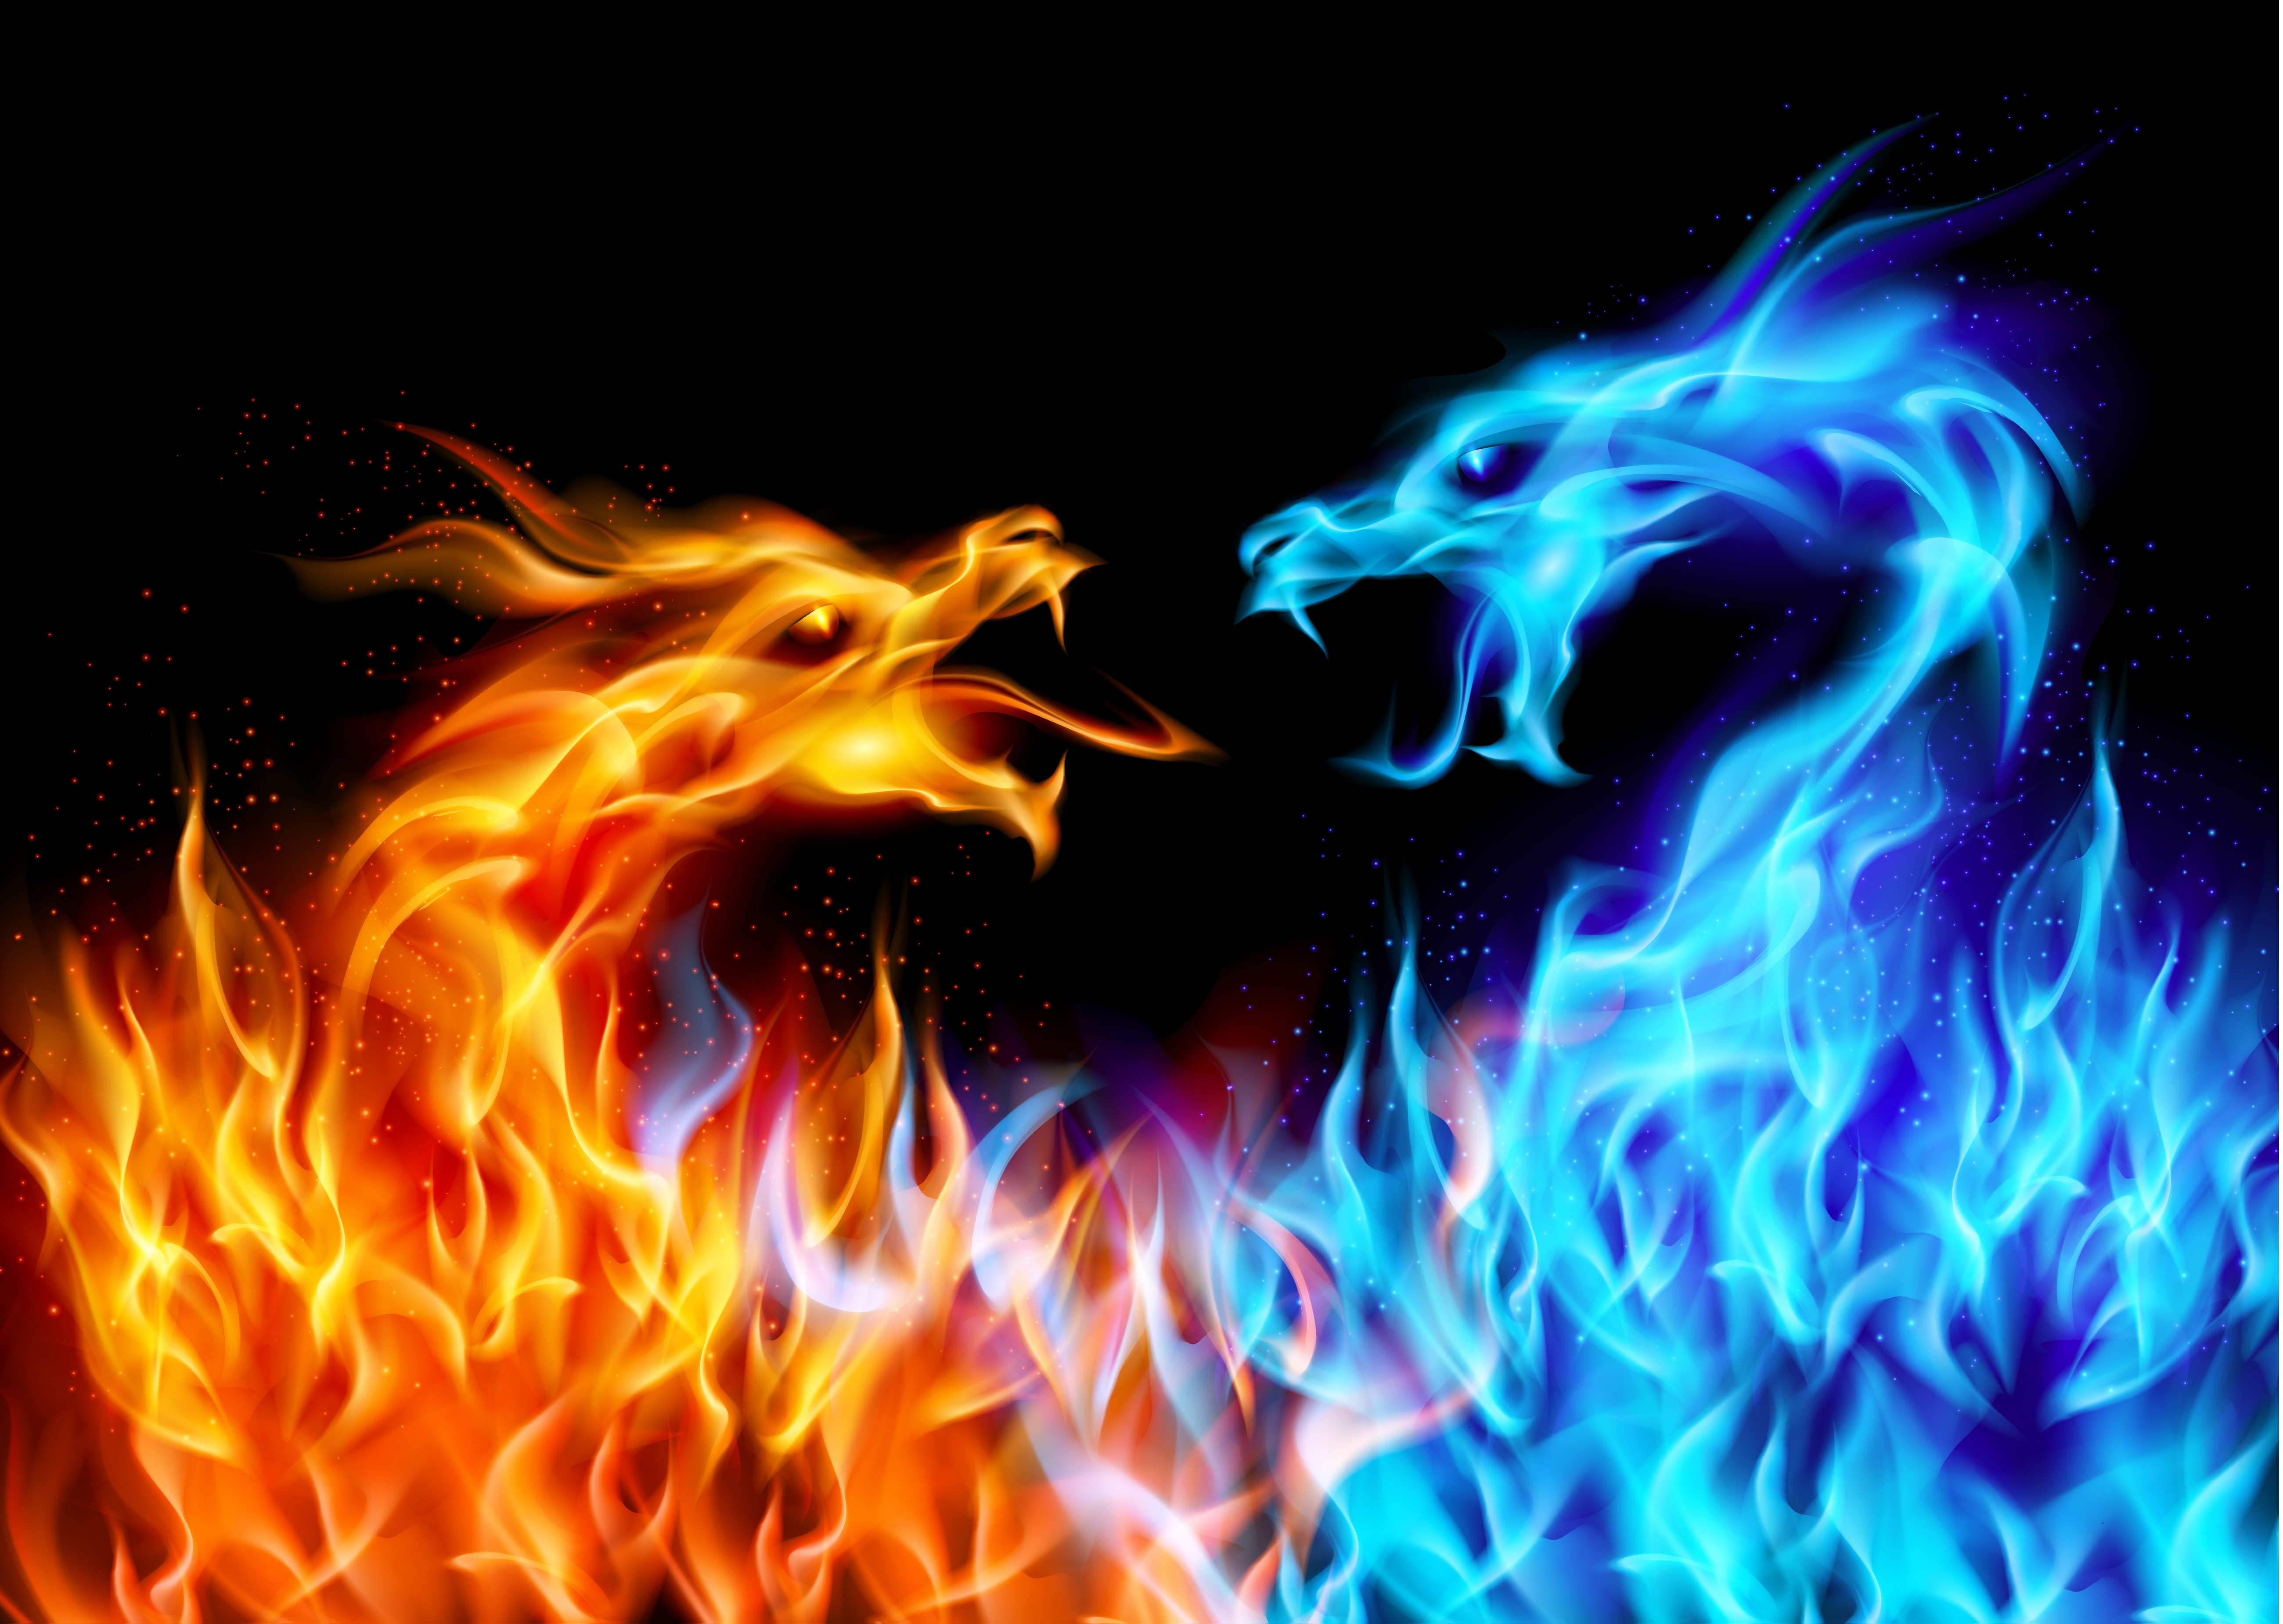 blue fire vs red fire